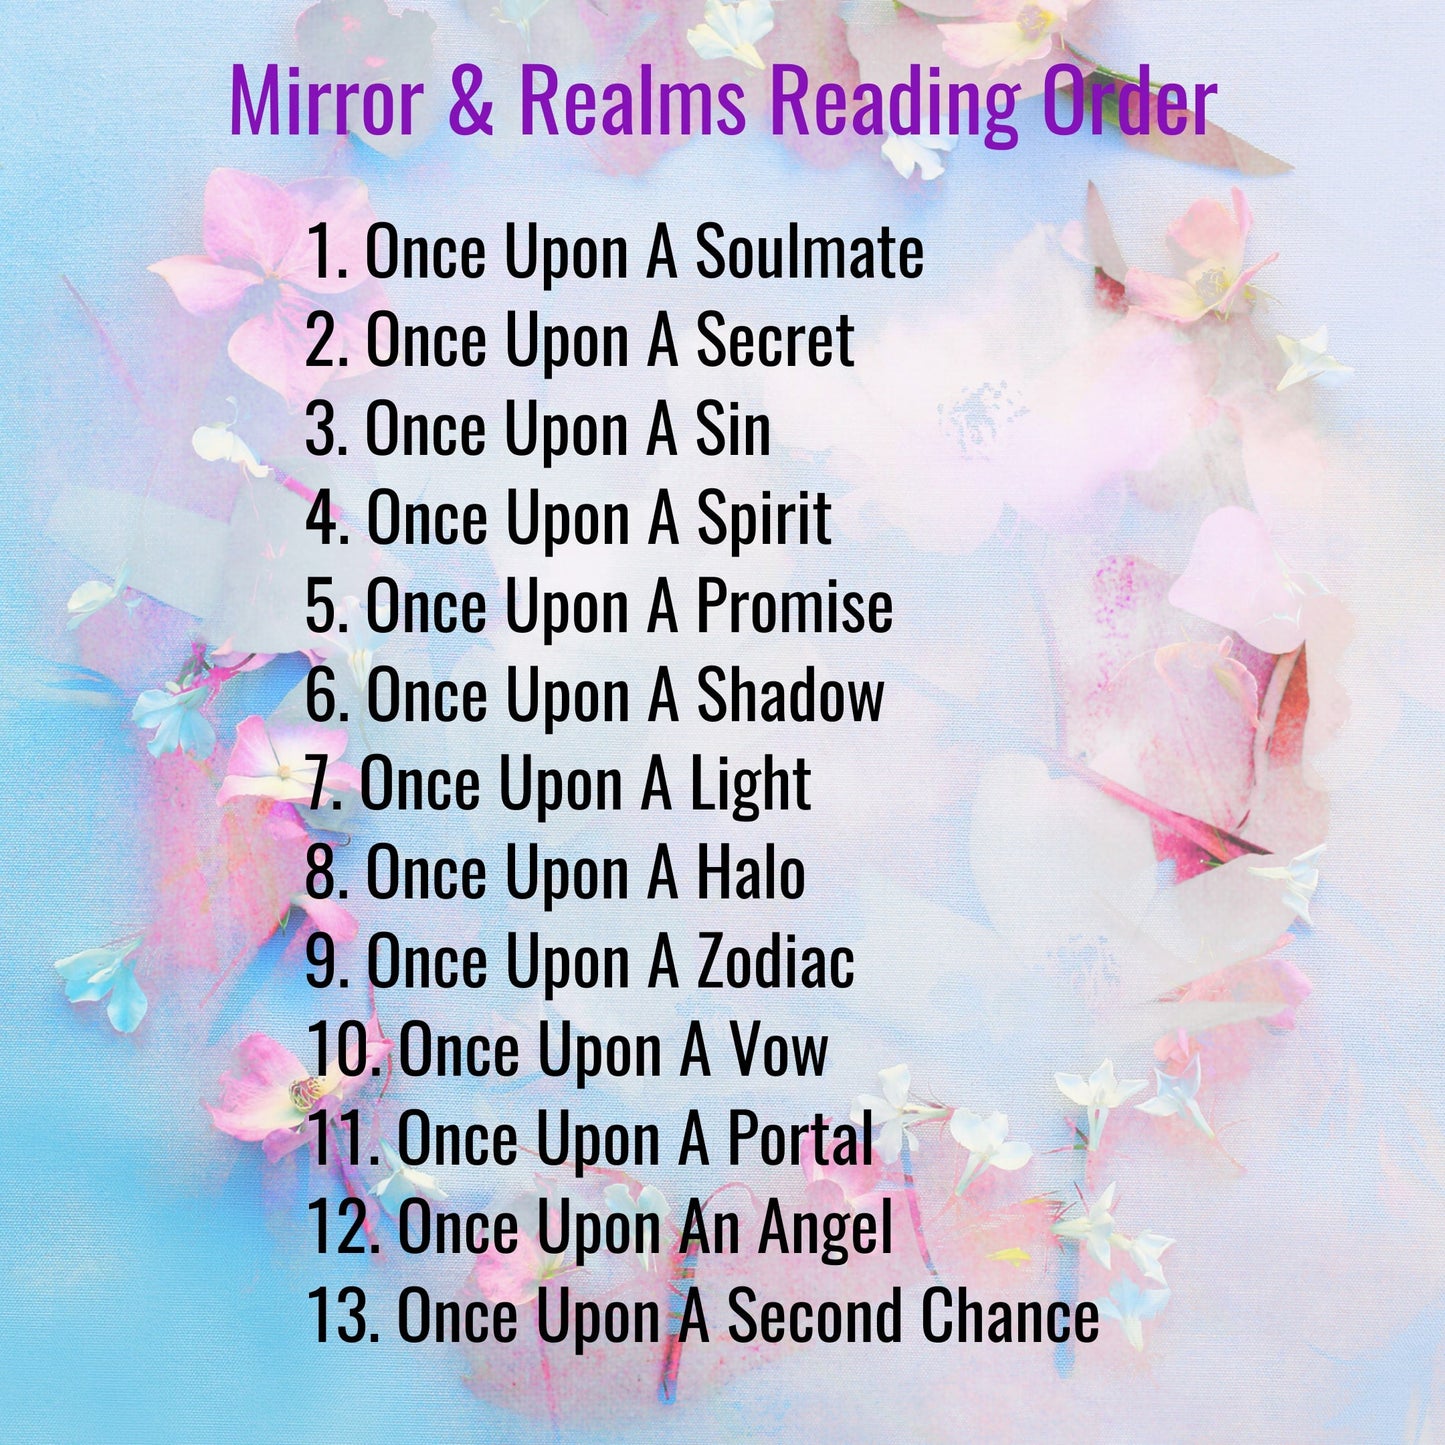 Mirror and Realms Ultimate E-books